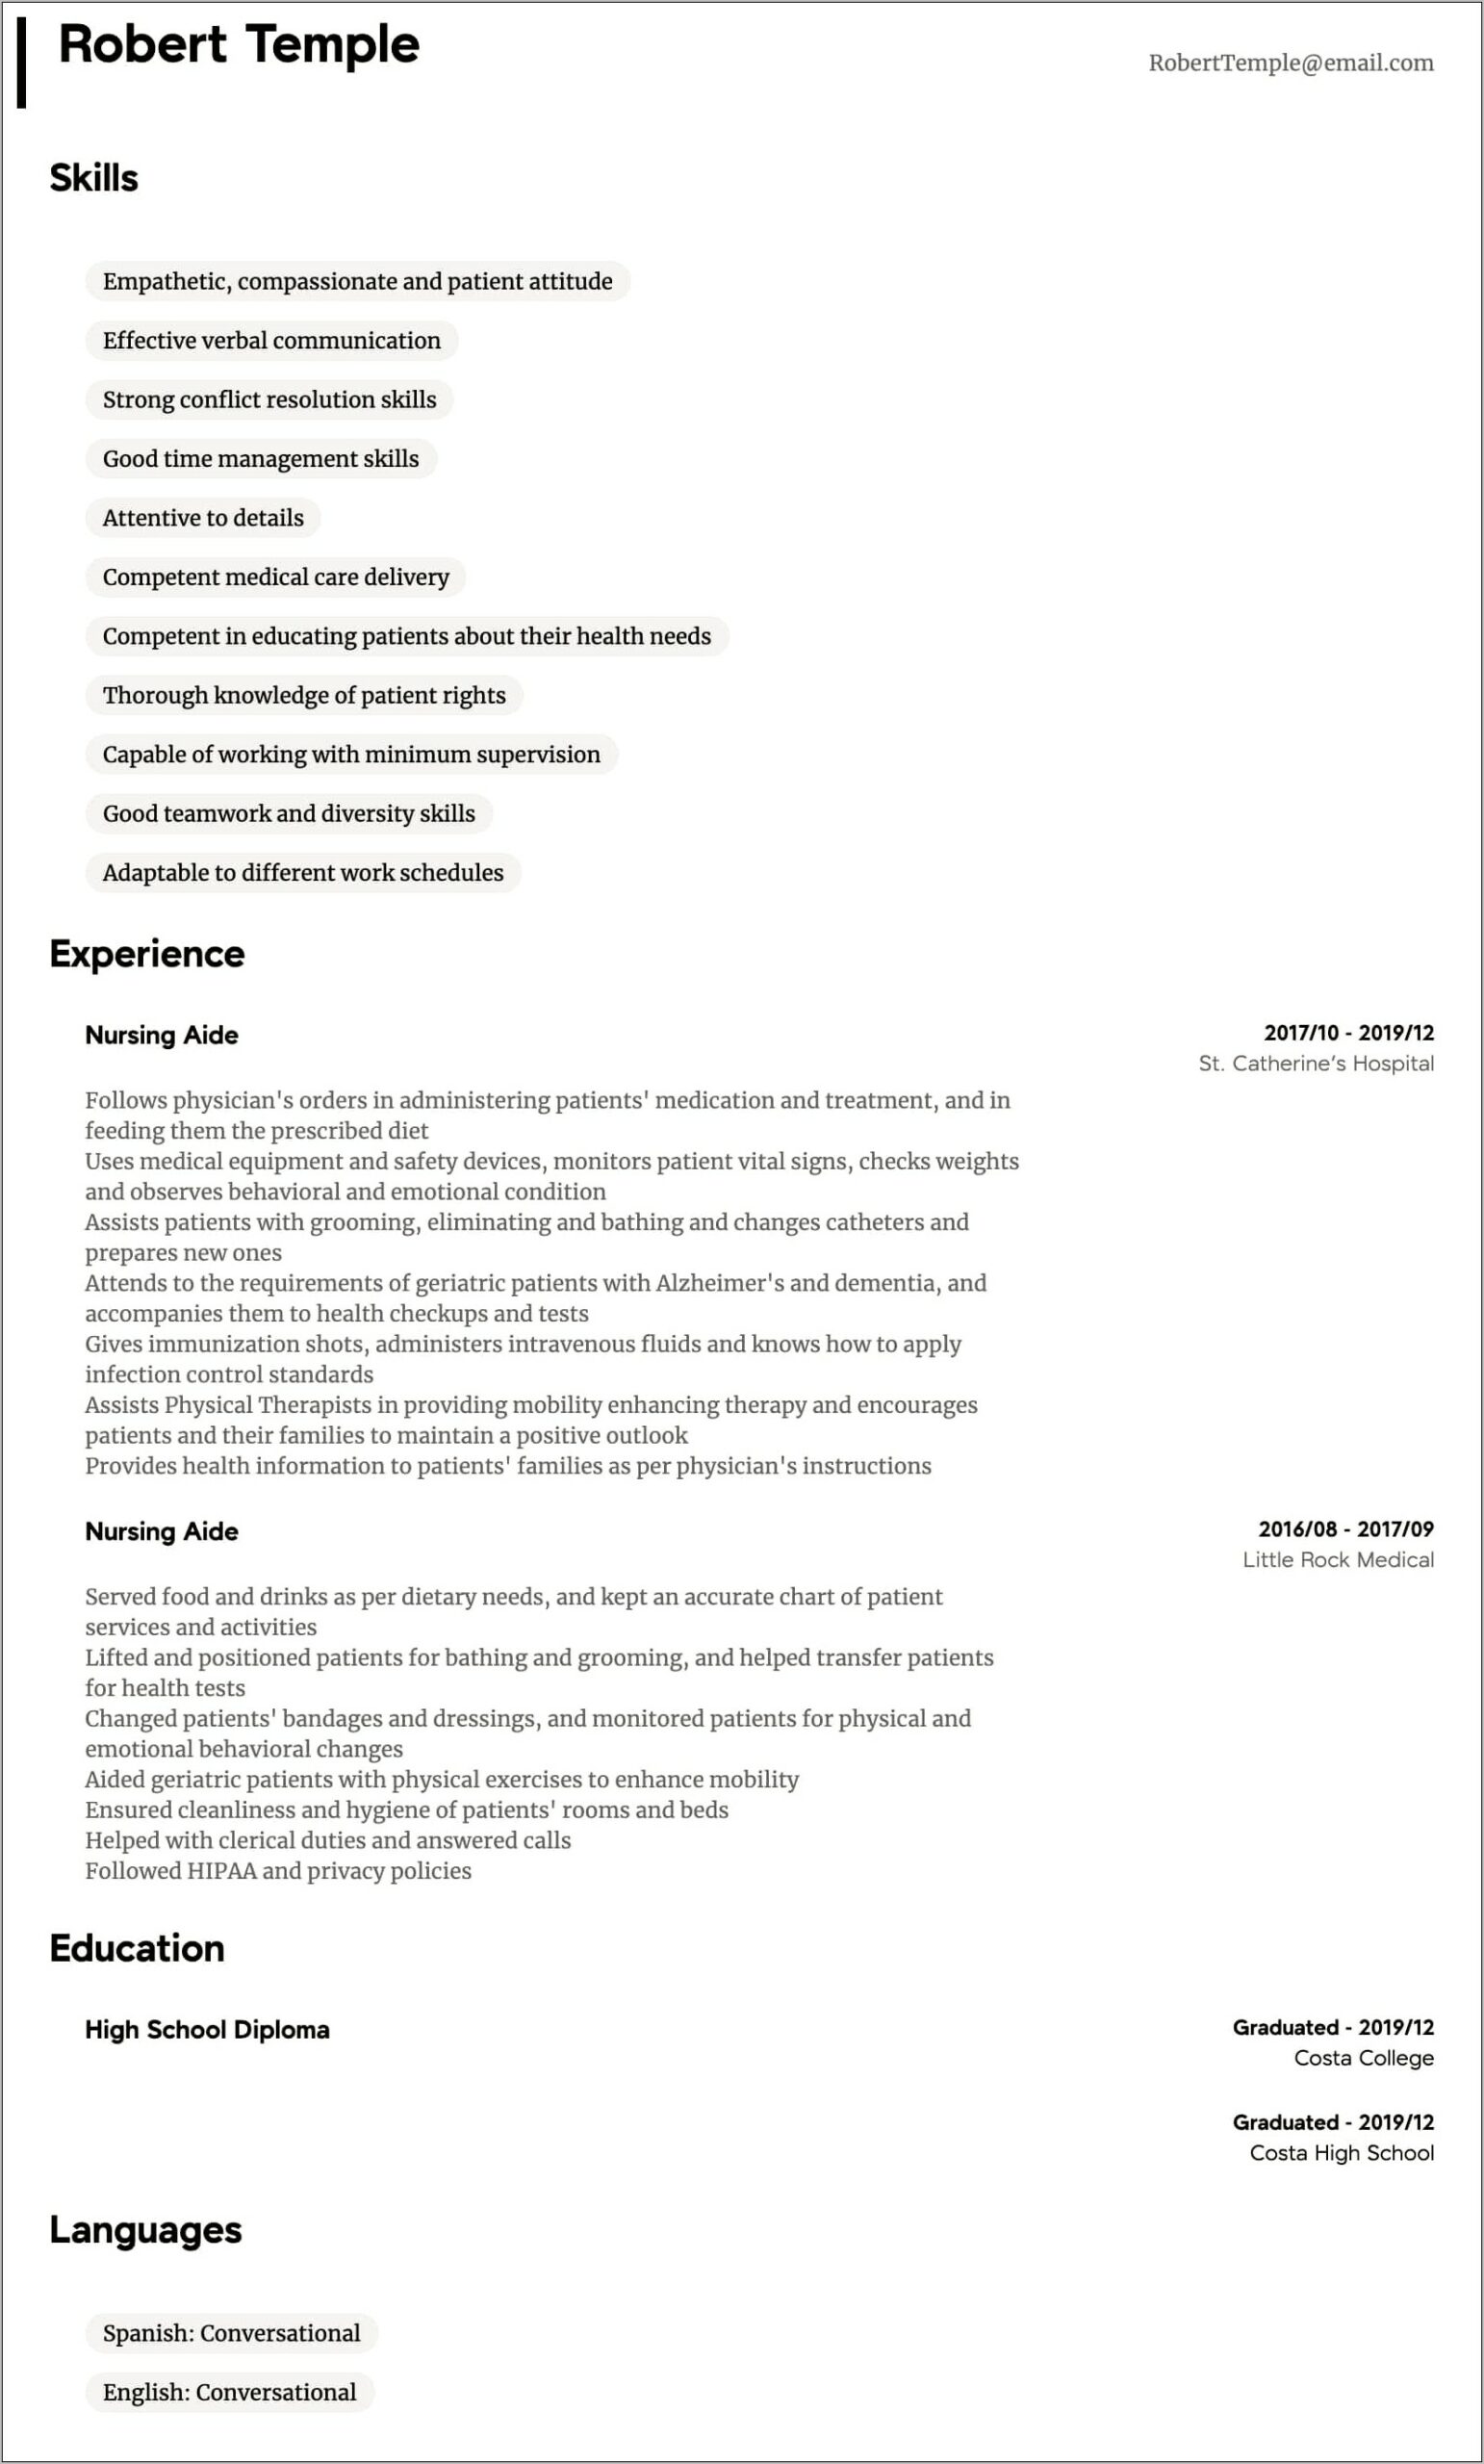 Nurse's Aide Job Description For Resume